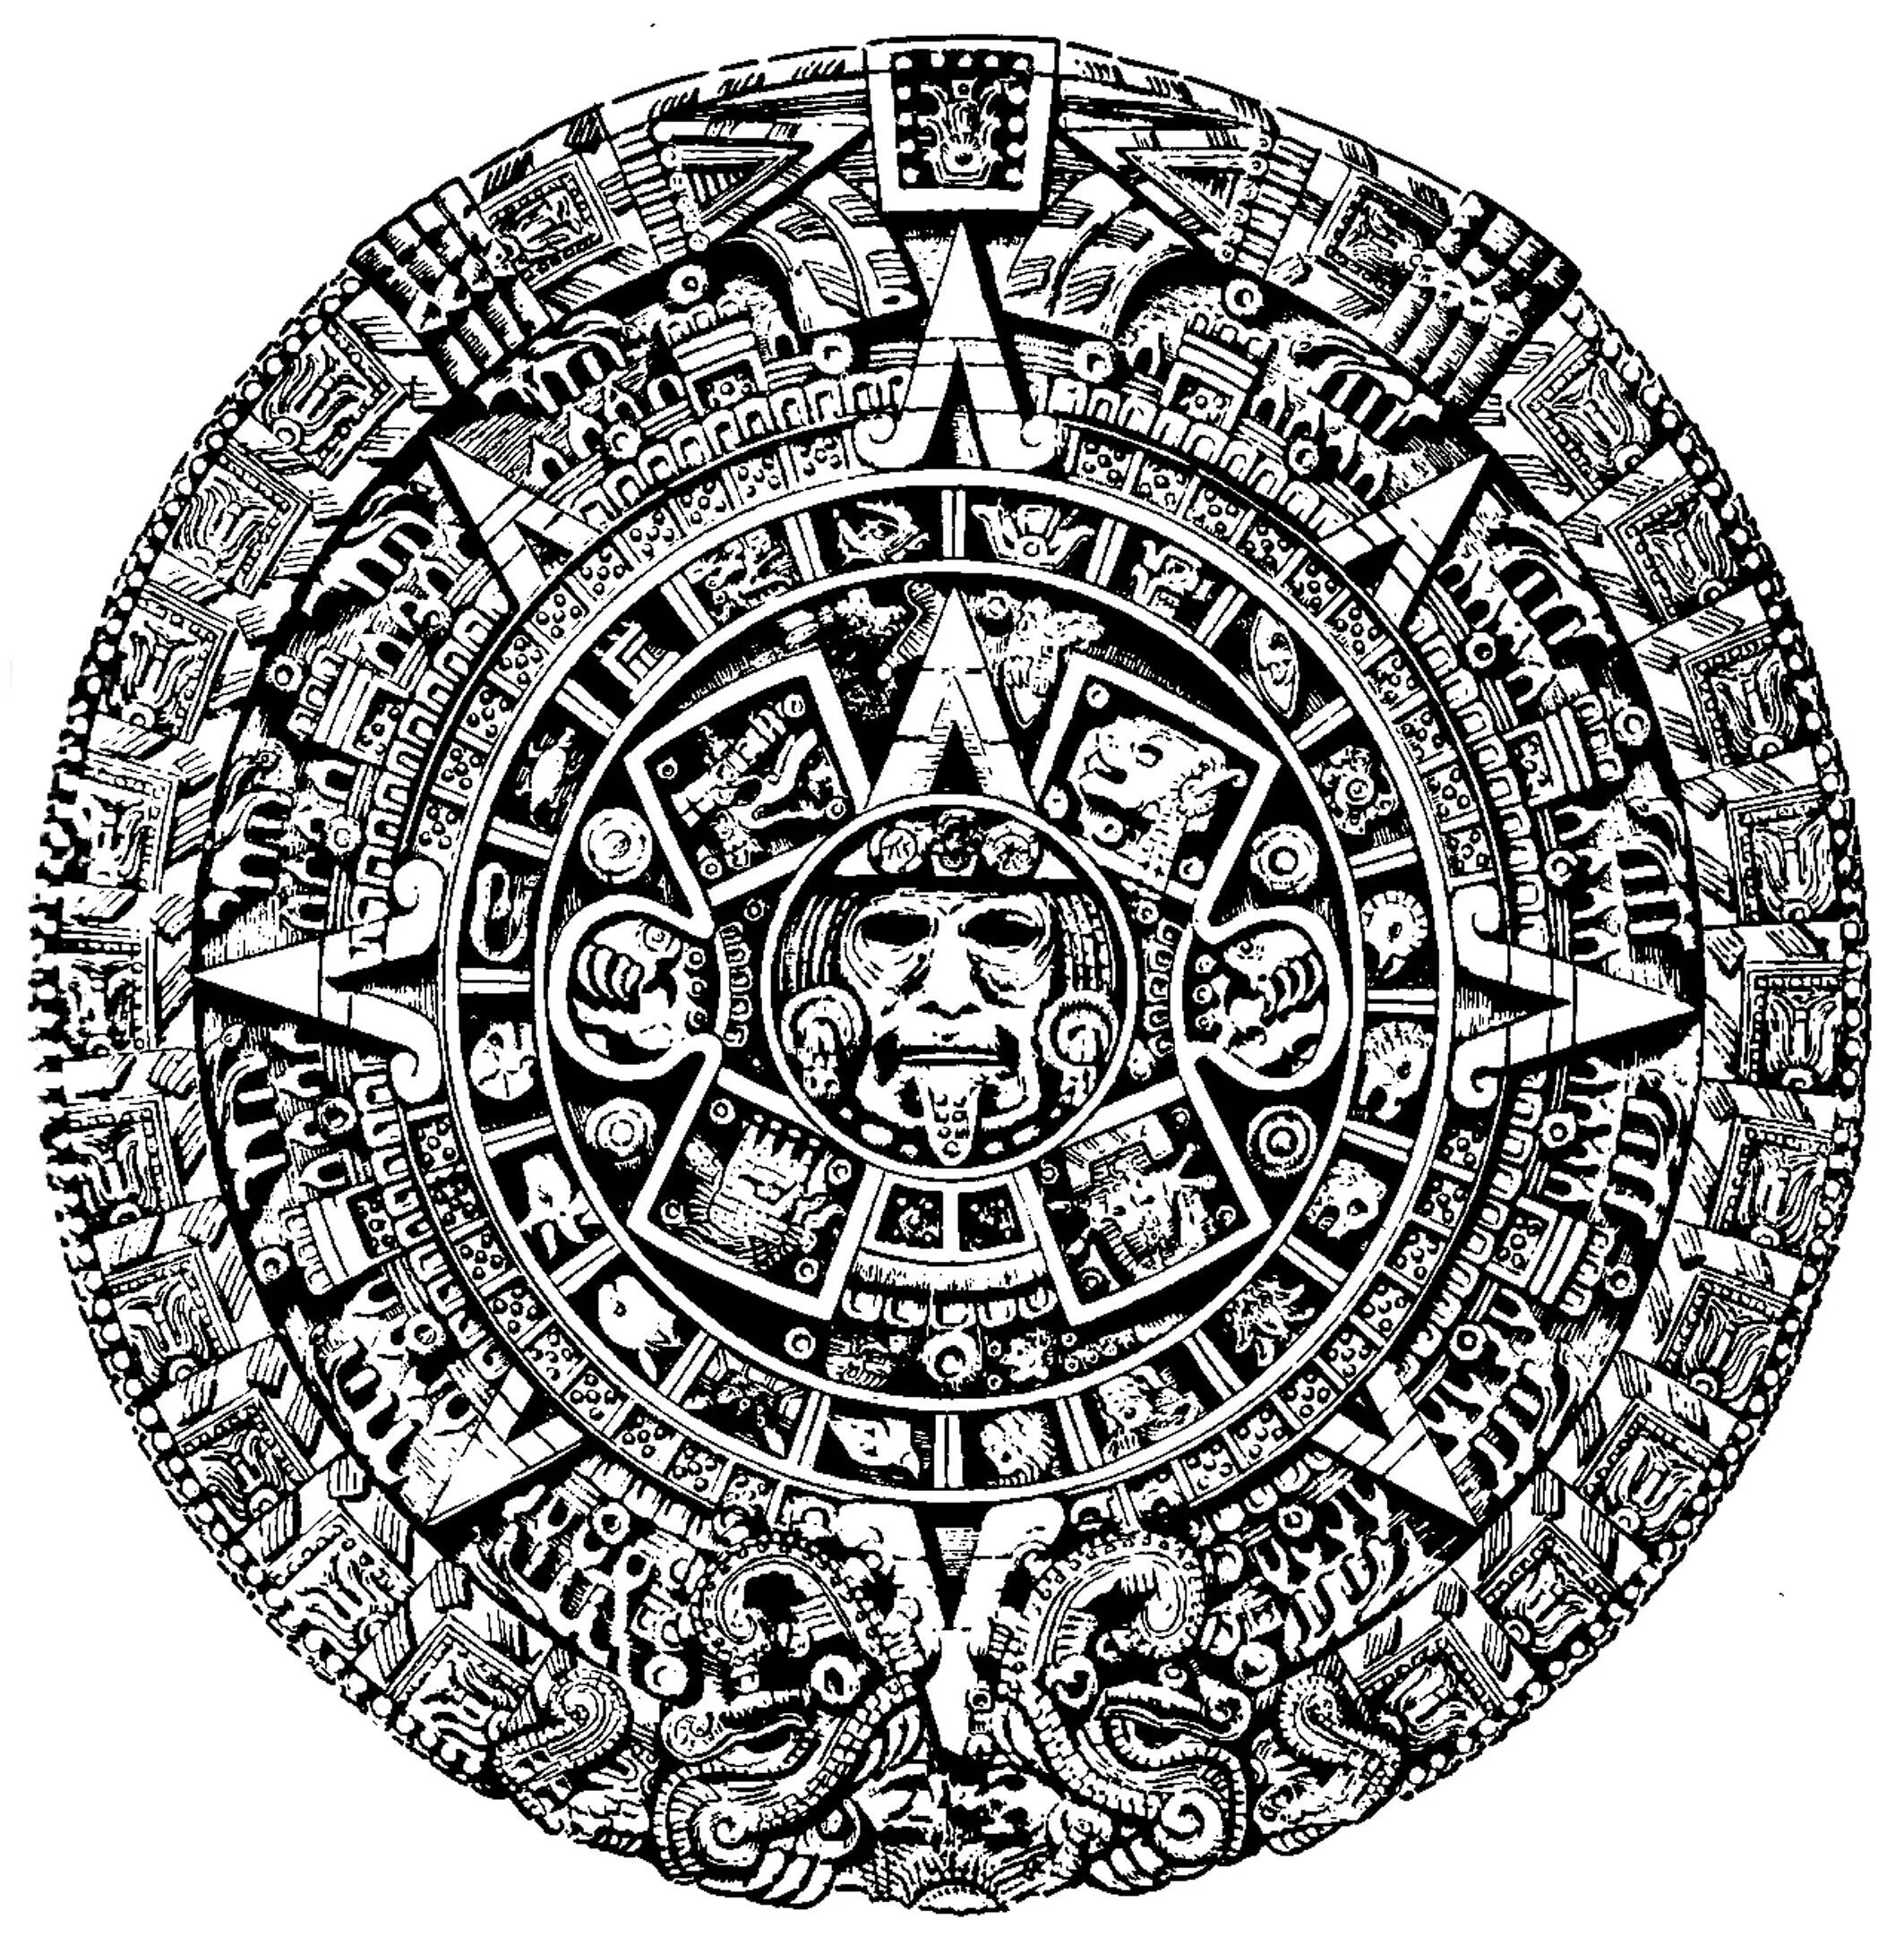 Иллюстрация календарь майя. Символ солнца Майя Ацтеки инки. Хааб – Солнечный календарь Майя. Календарный круг Майя. Древний Ацтекский календарь.